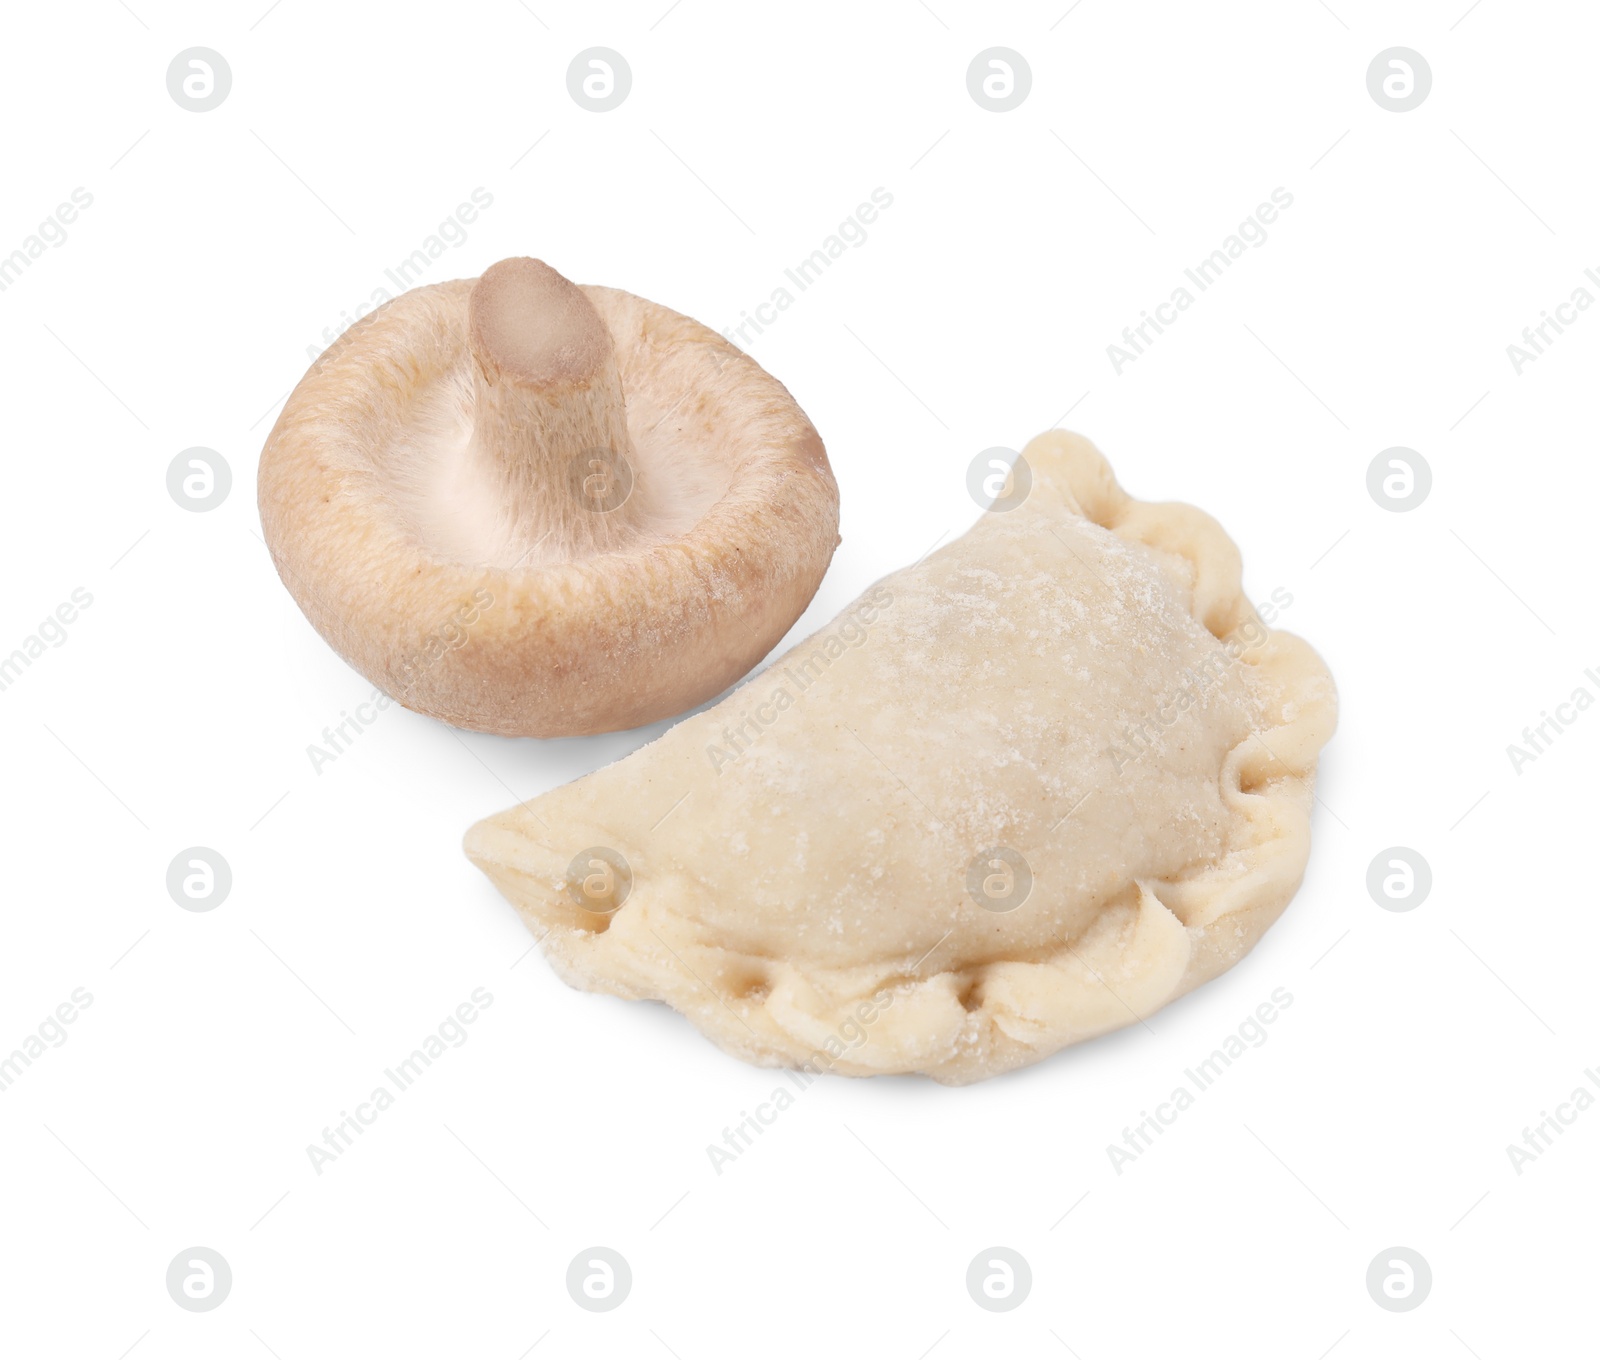 Photo of One raw dumpling (varenyk) and fresh mushroom isolated on white